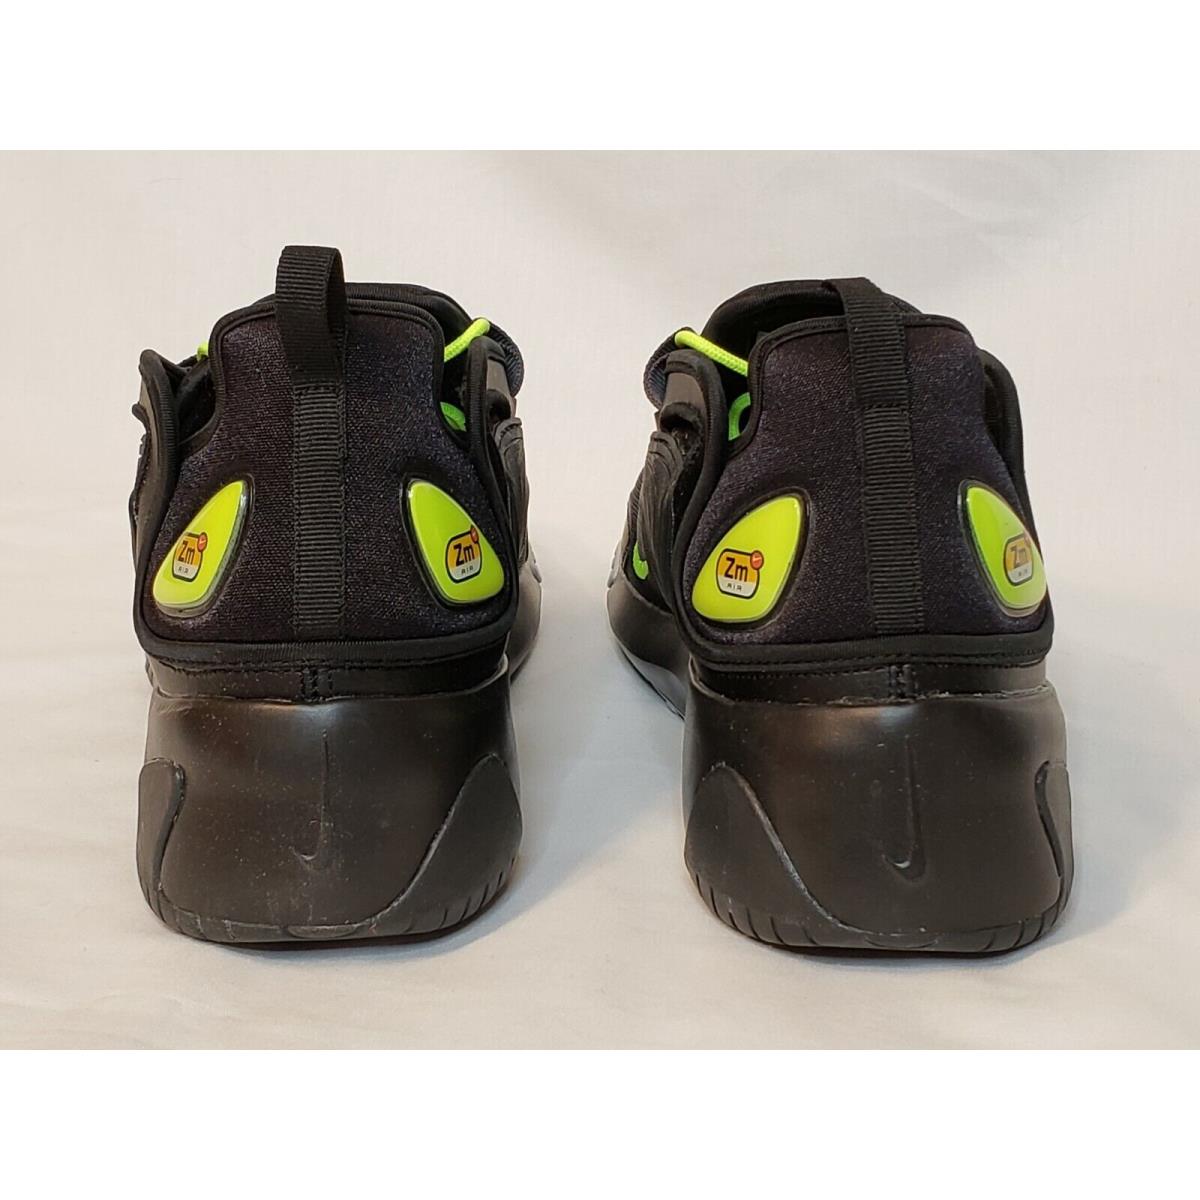 Nike shoes Zoom - Black/Volt-Anthracite 6